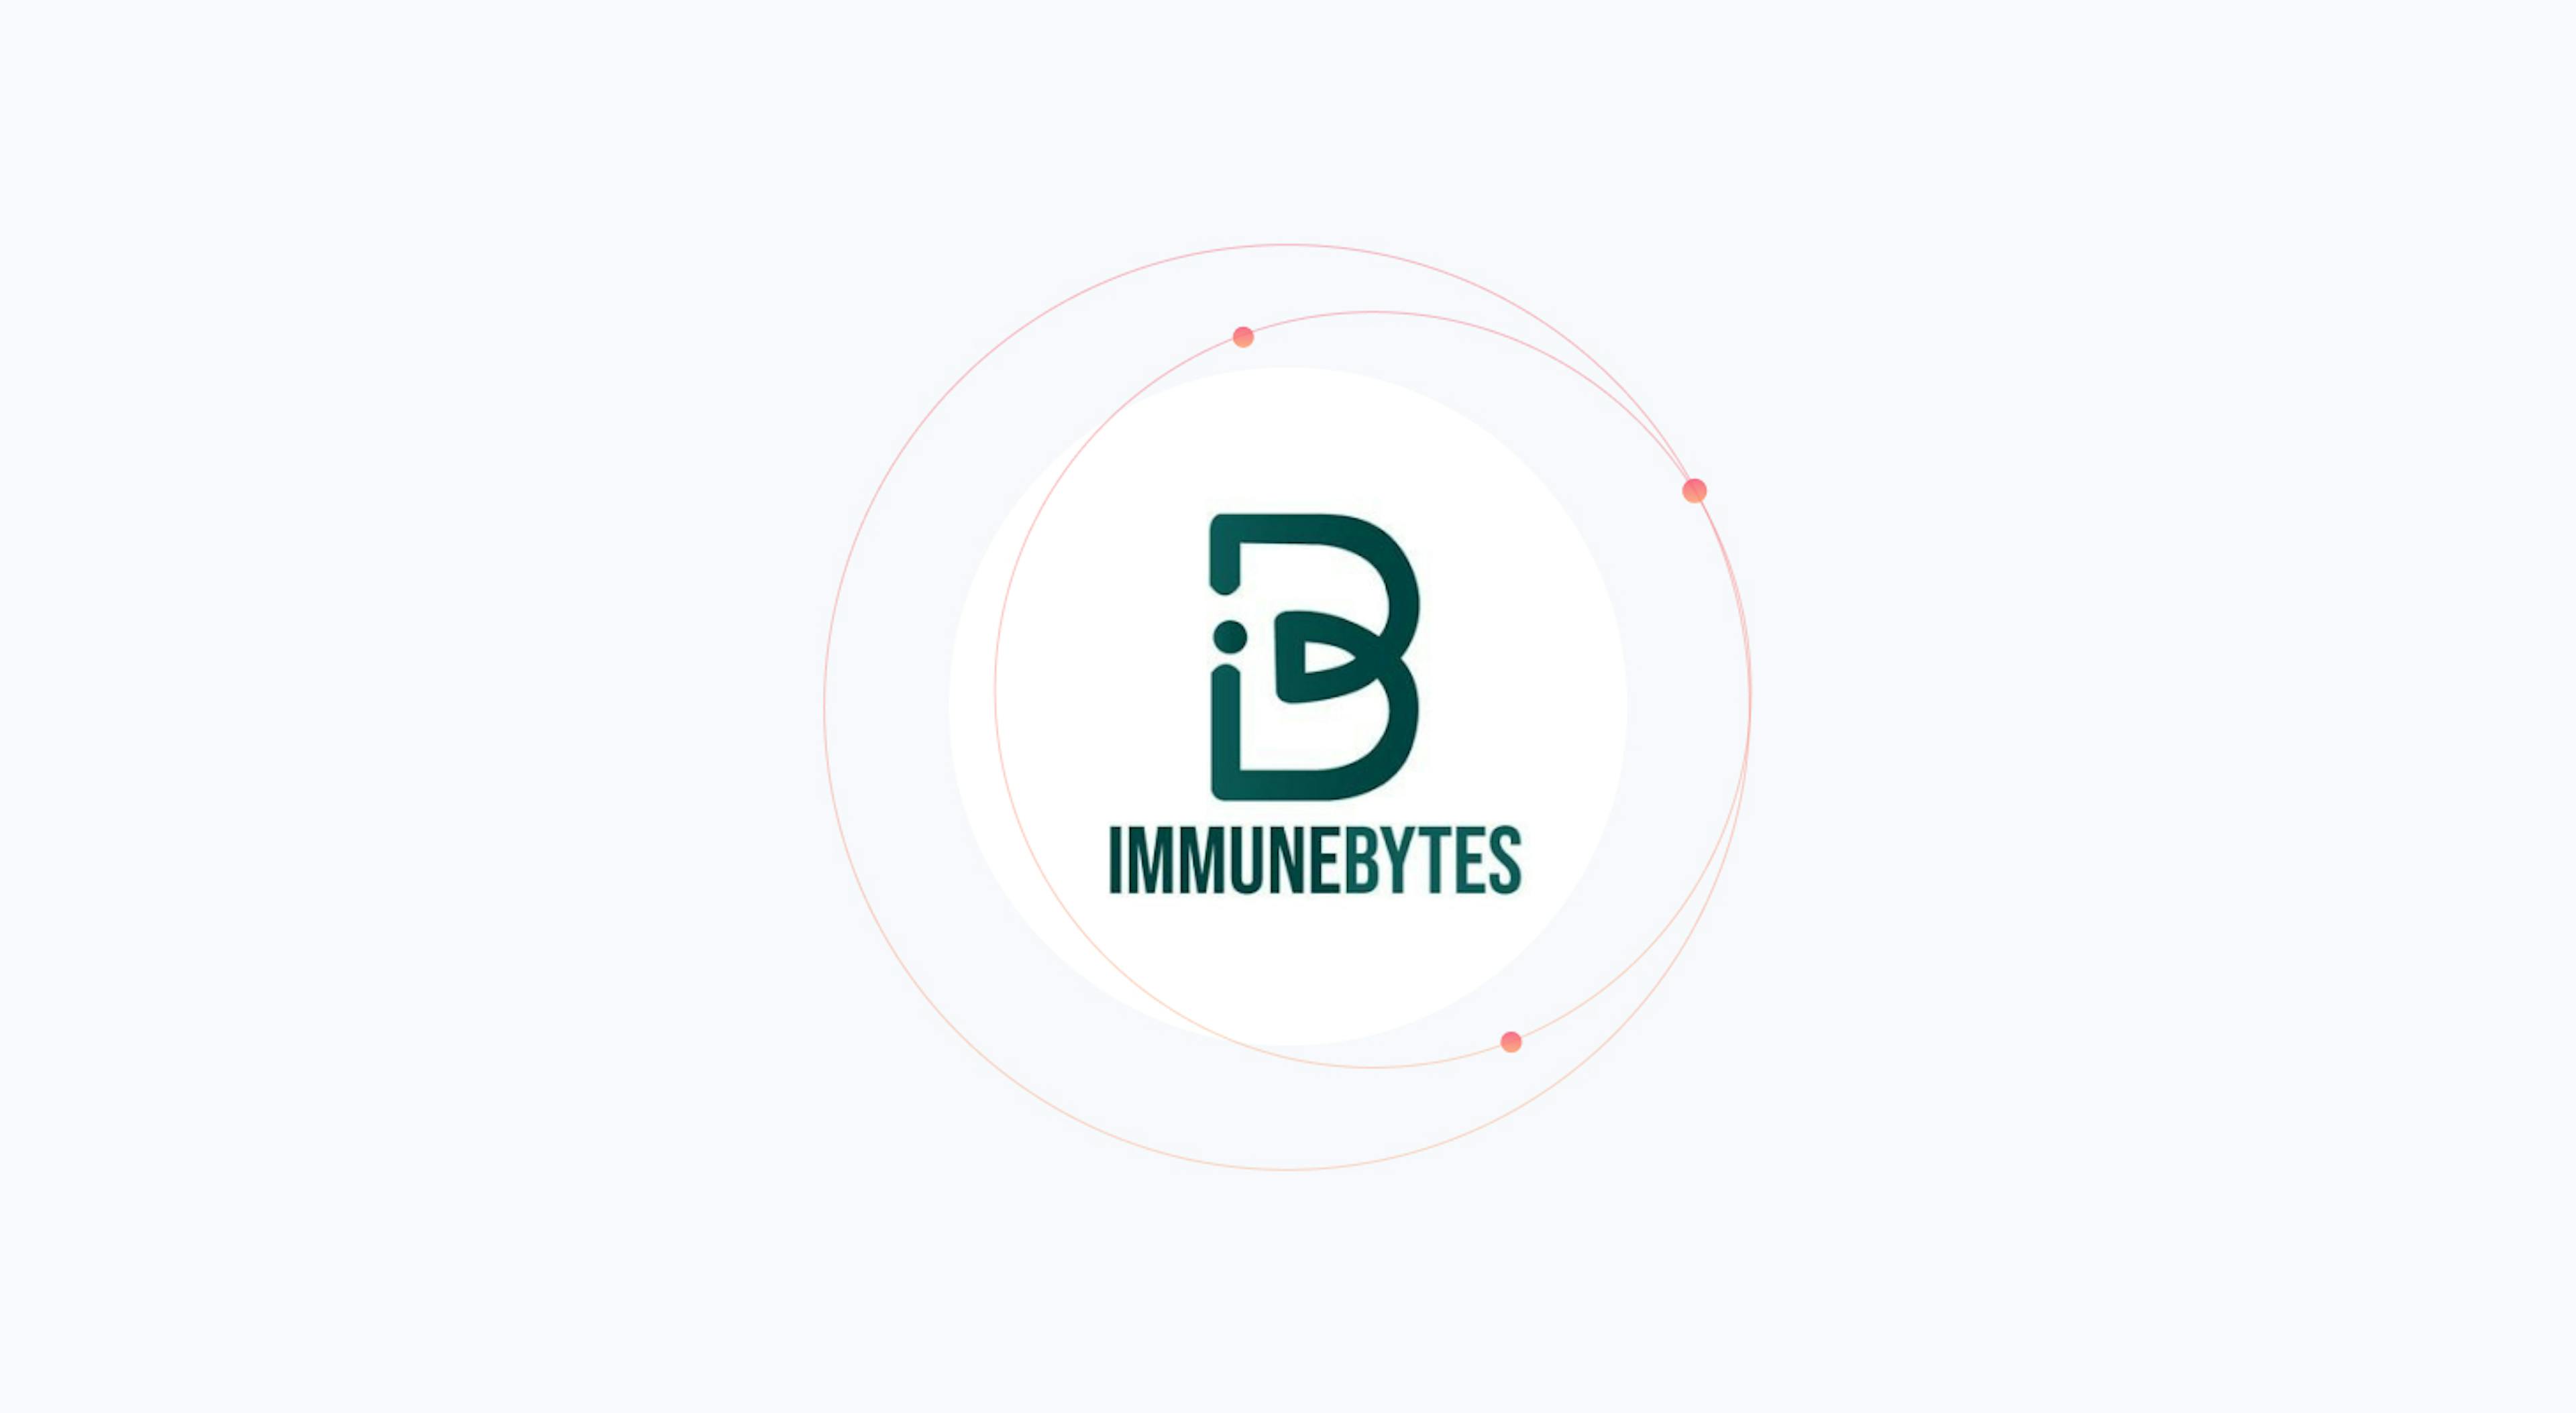 Immunebytes